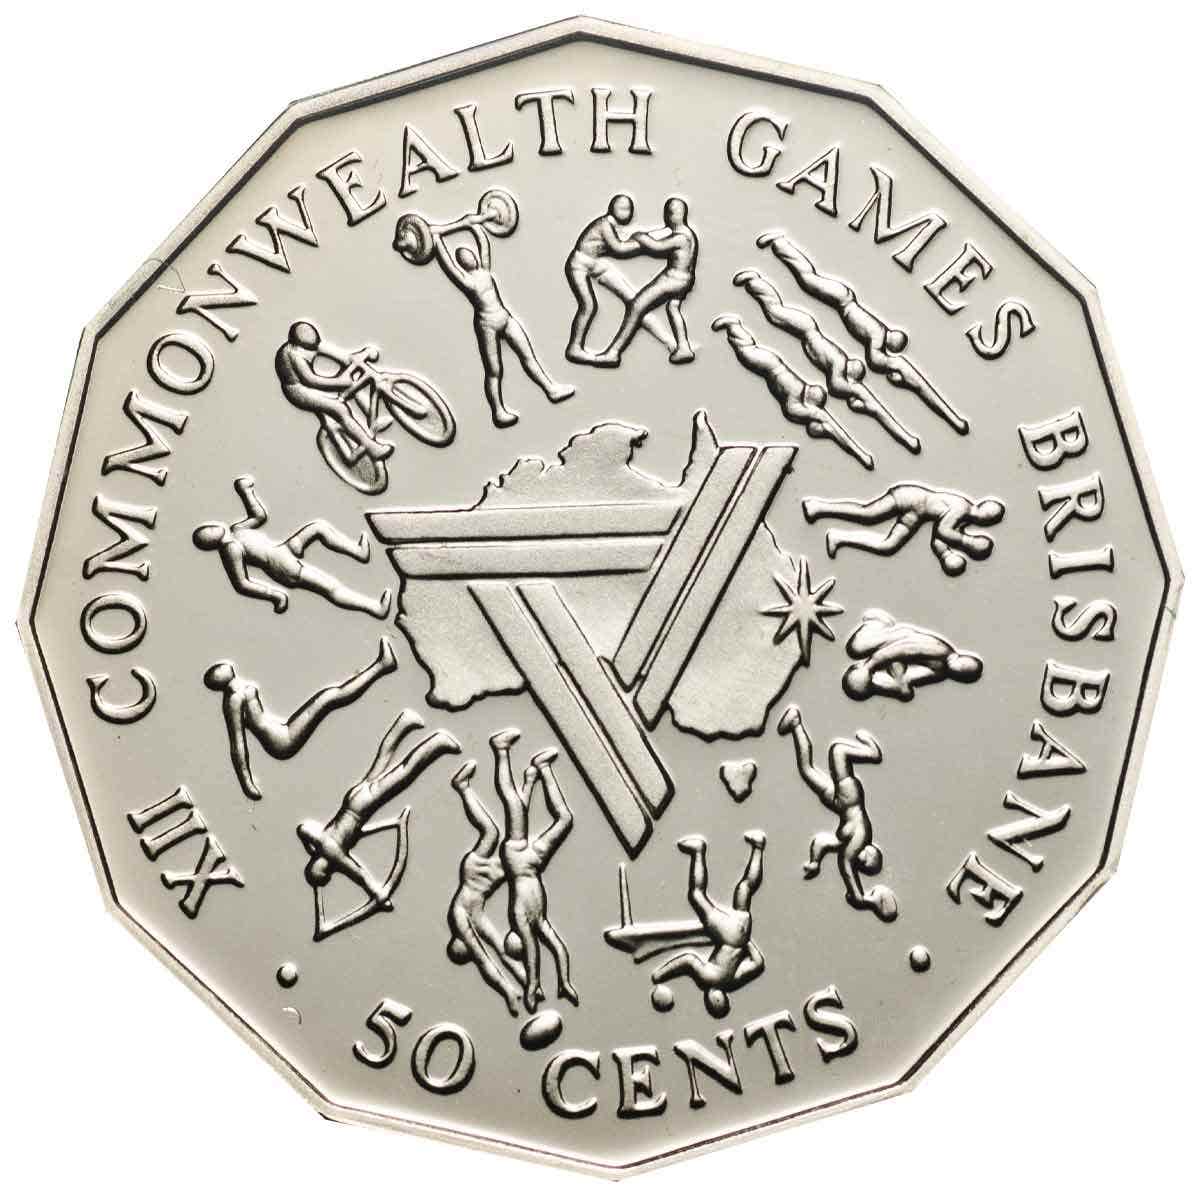 Australia Brisbane Commonwealth Games 1982 6-Coin Proof Set